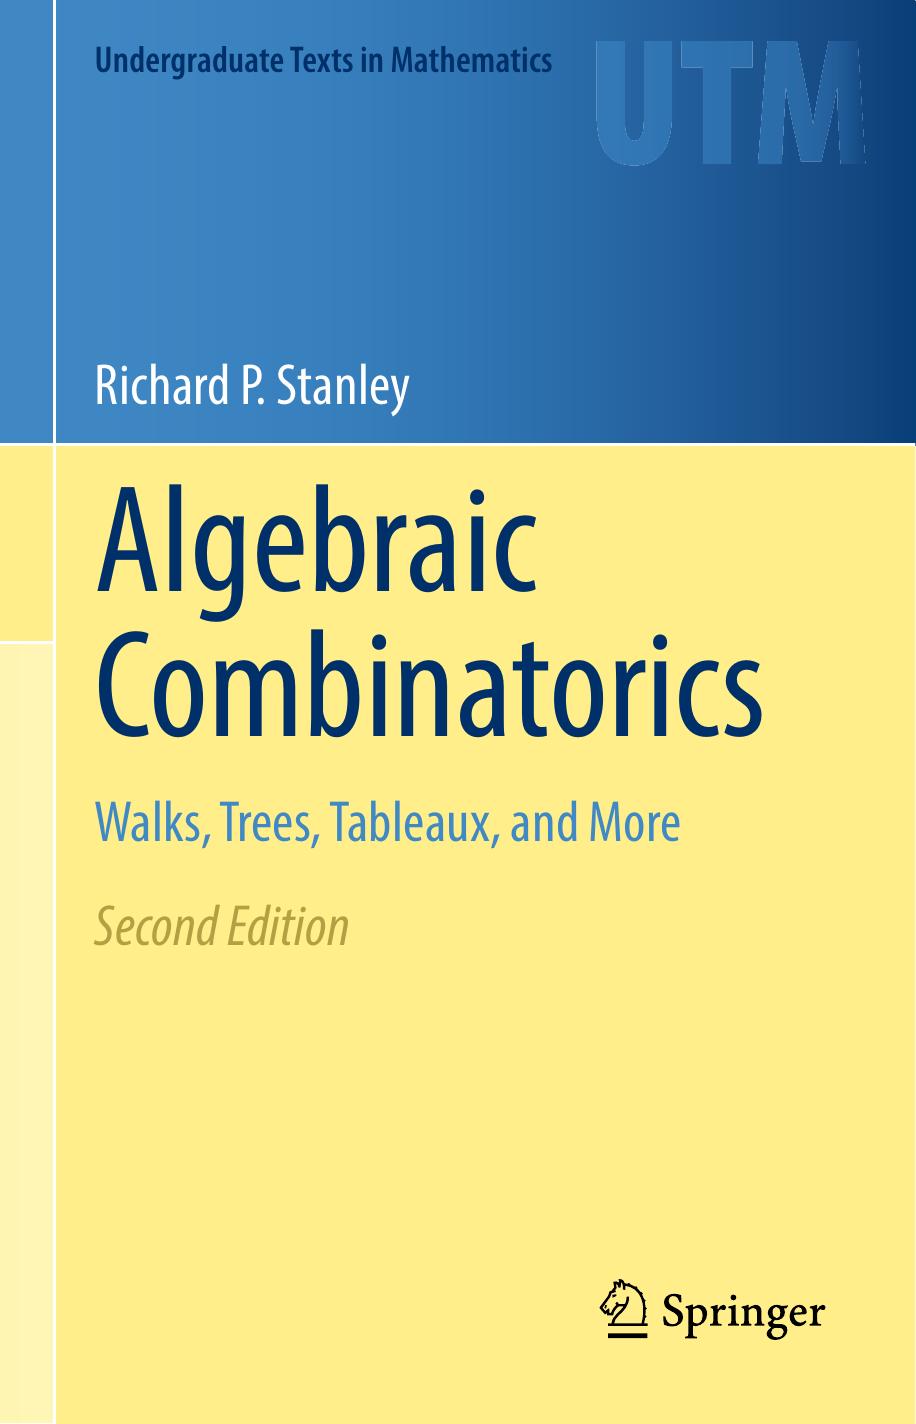 Algebraic Combinatorics. Walks, Trees, Tableaux, and More by Richard P. Stanley